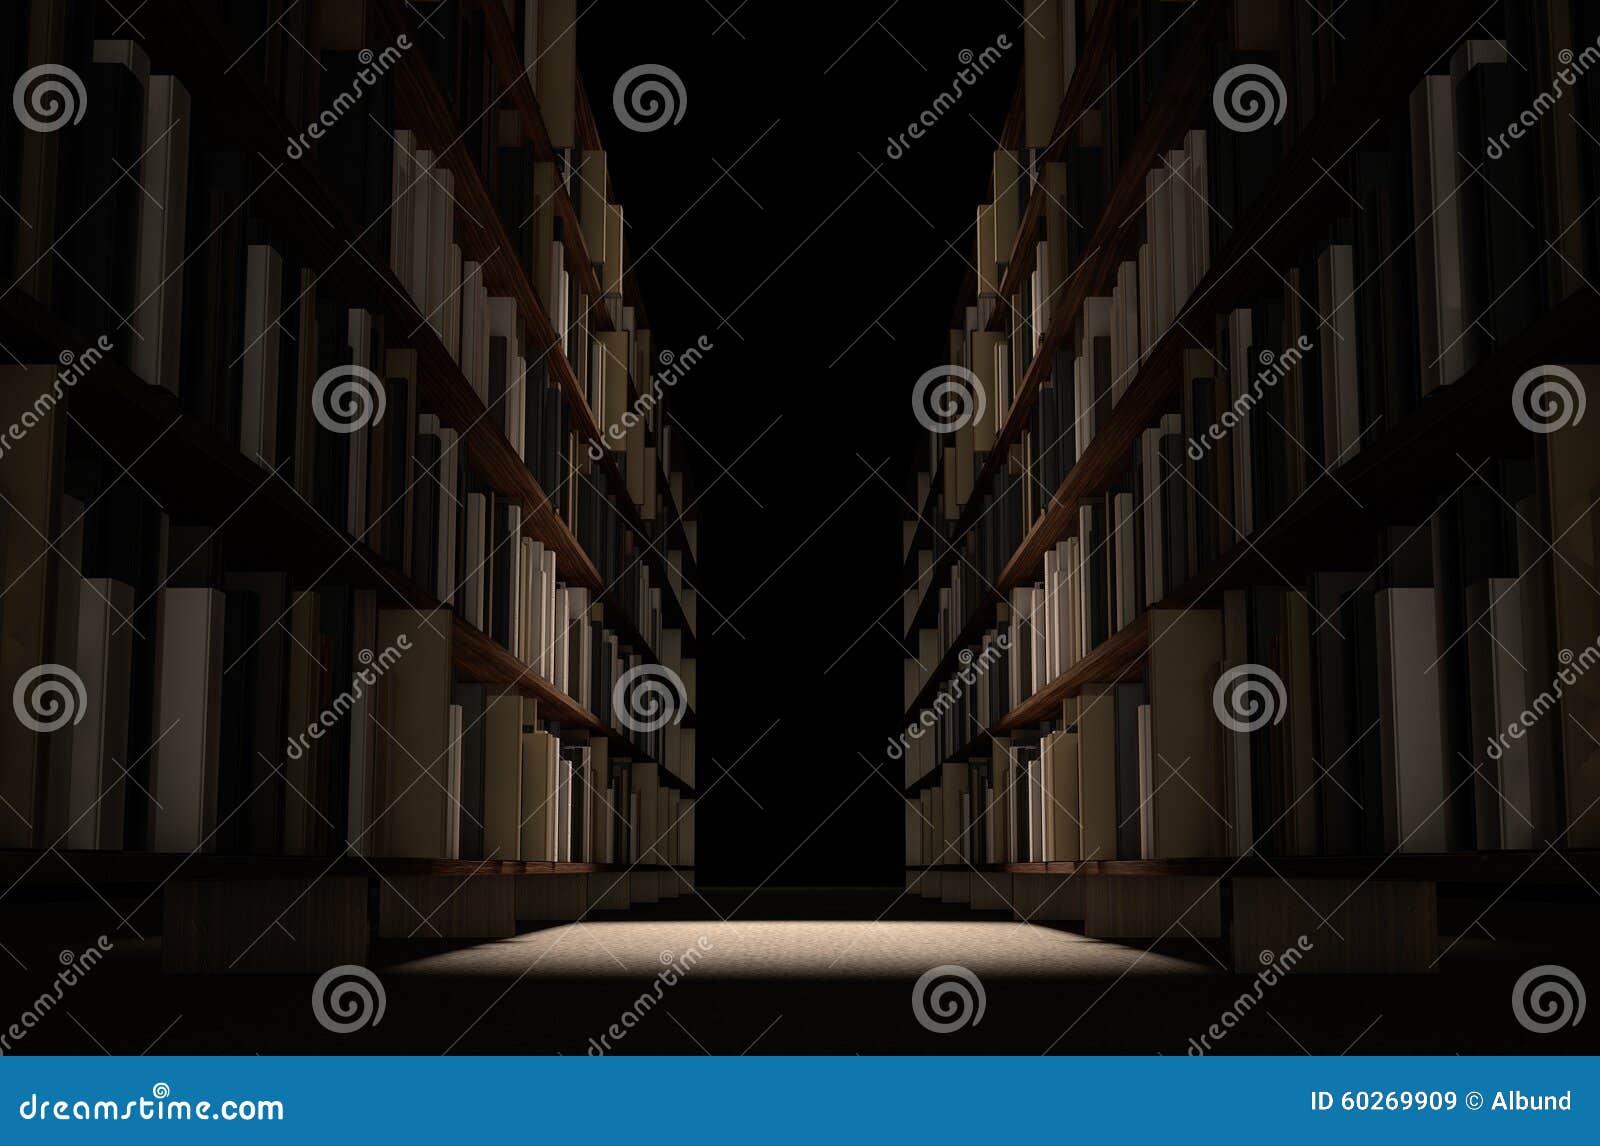 library bookshelf aisle